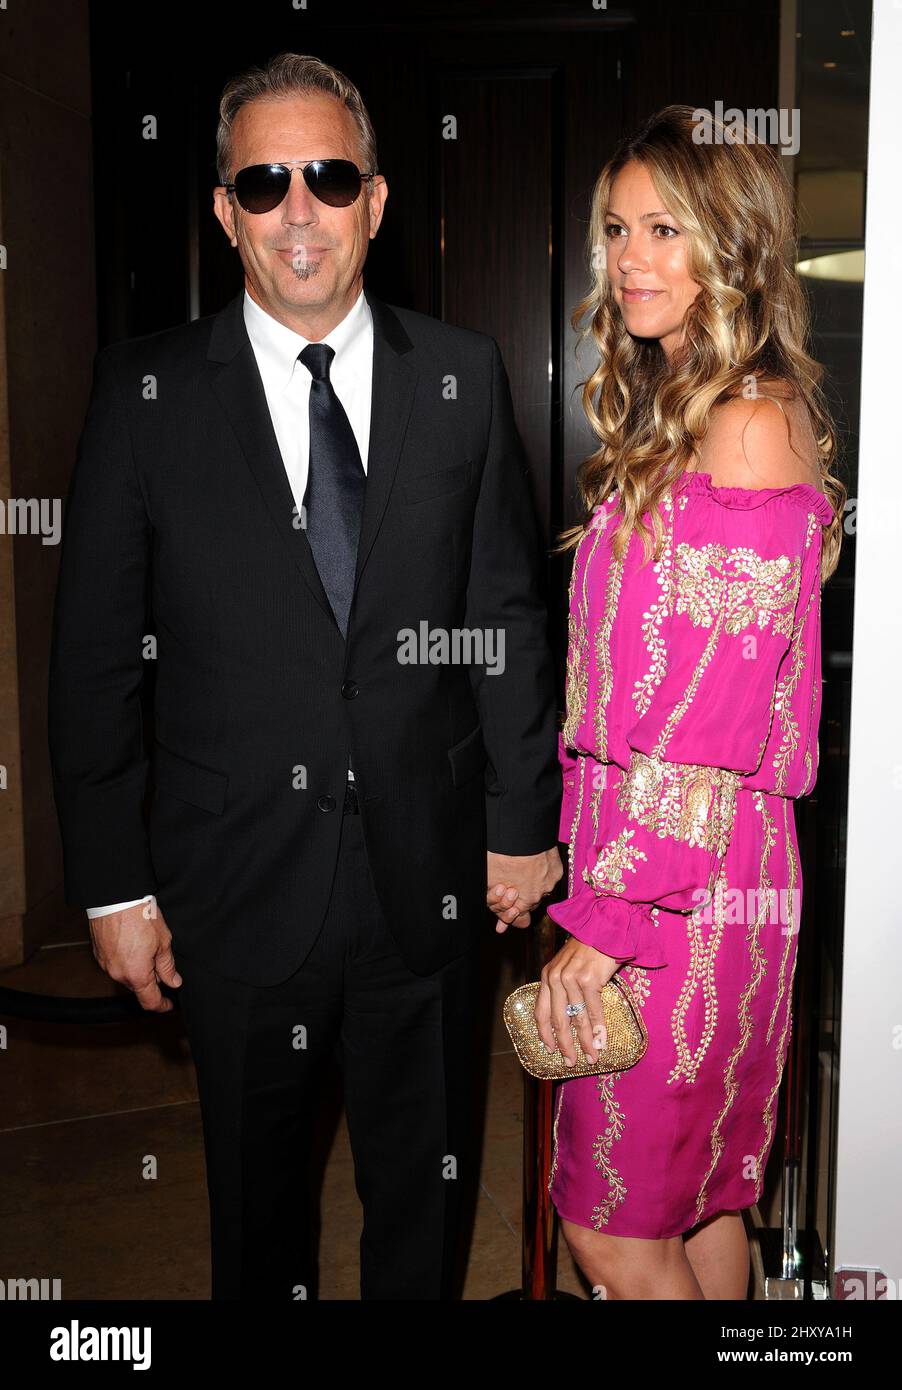 Kevin Costner und seine Frau Christine Baumgartner nahmen an den Critics' Choice Awards 2012 im Beverly Hilton in Los Angeles, USA, Teil. Stockfoto